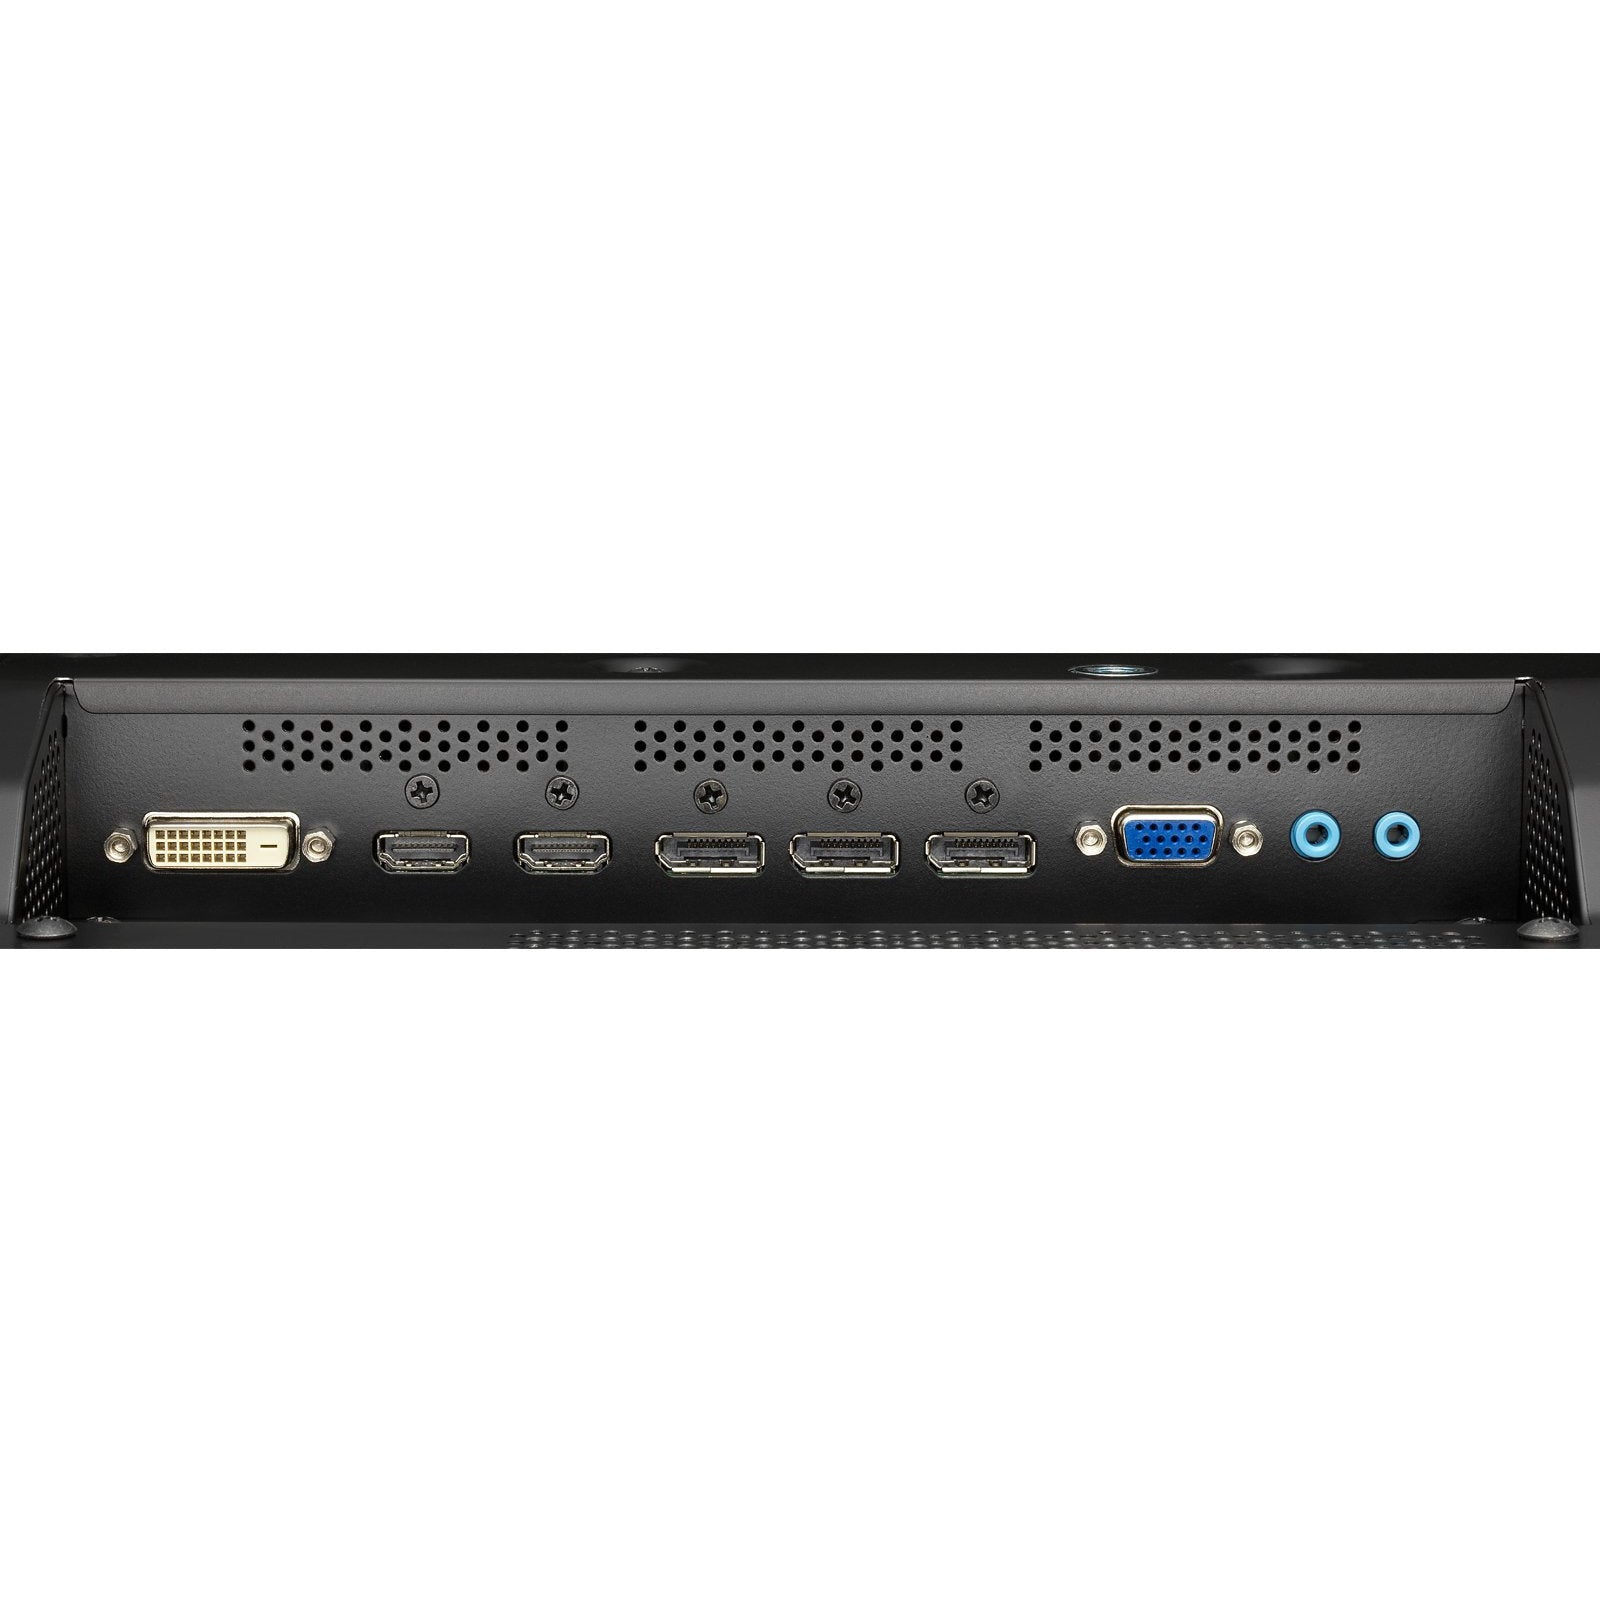 Dark Slate Gray NEC MultiSync® UN552V LCD 55" Video Wall Display